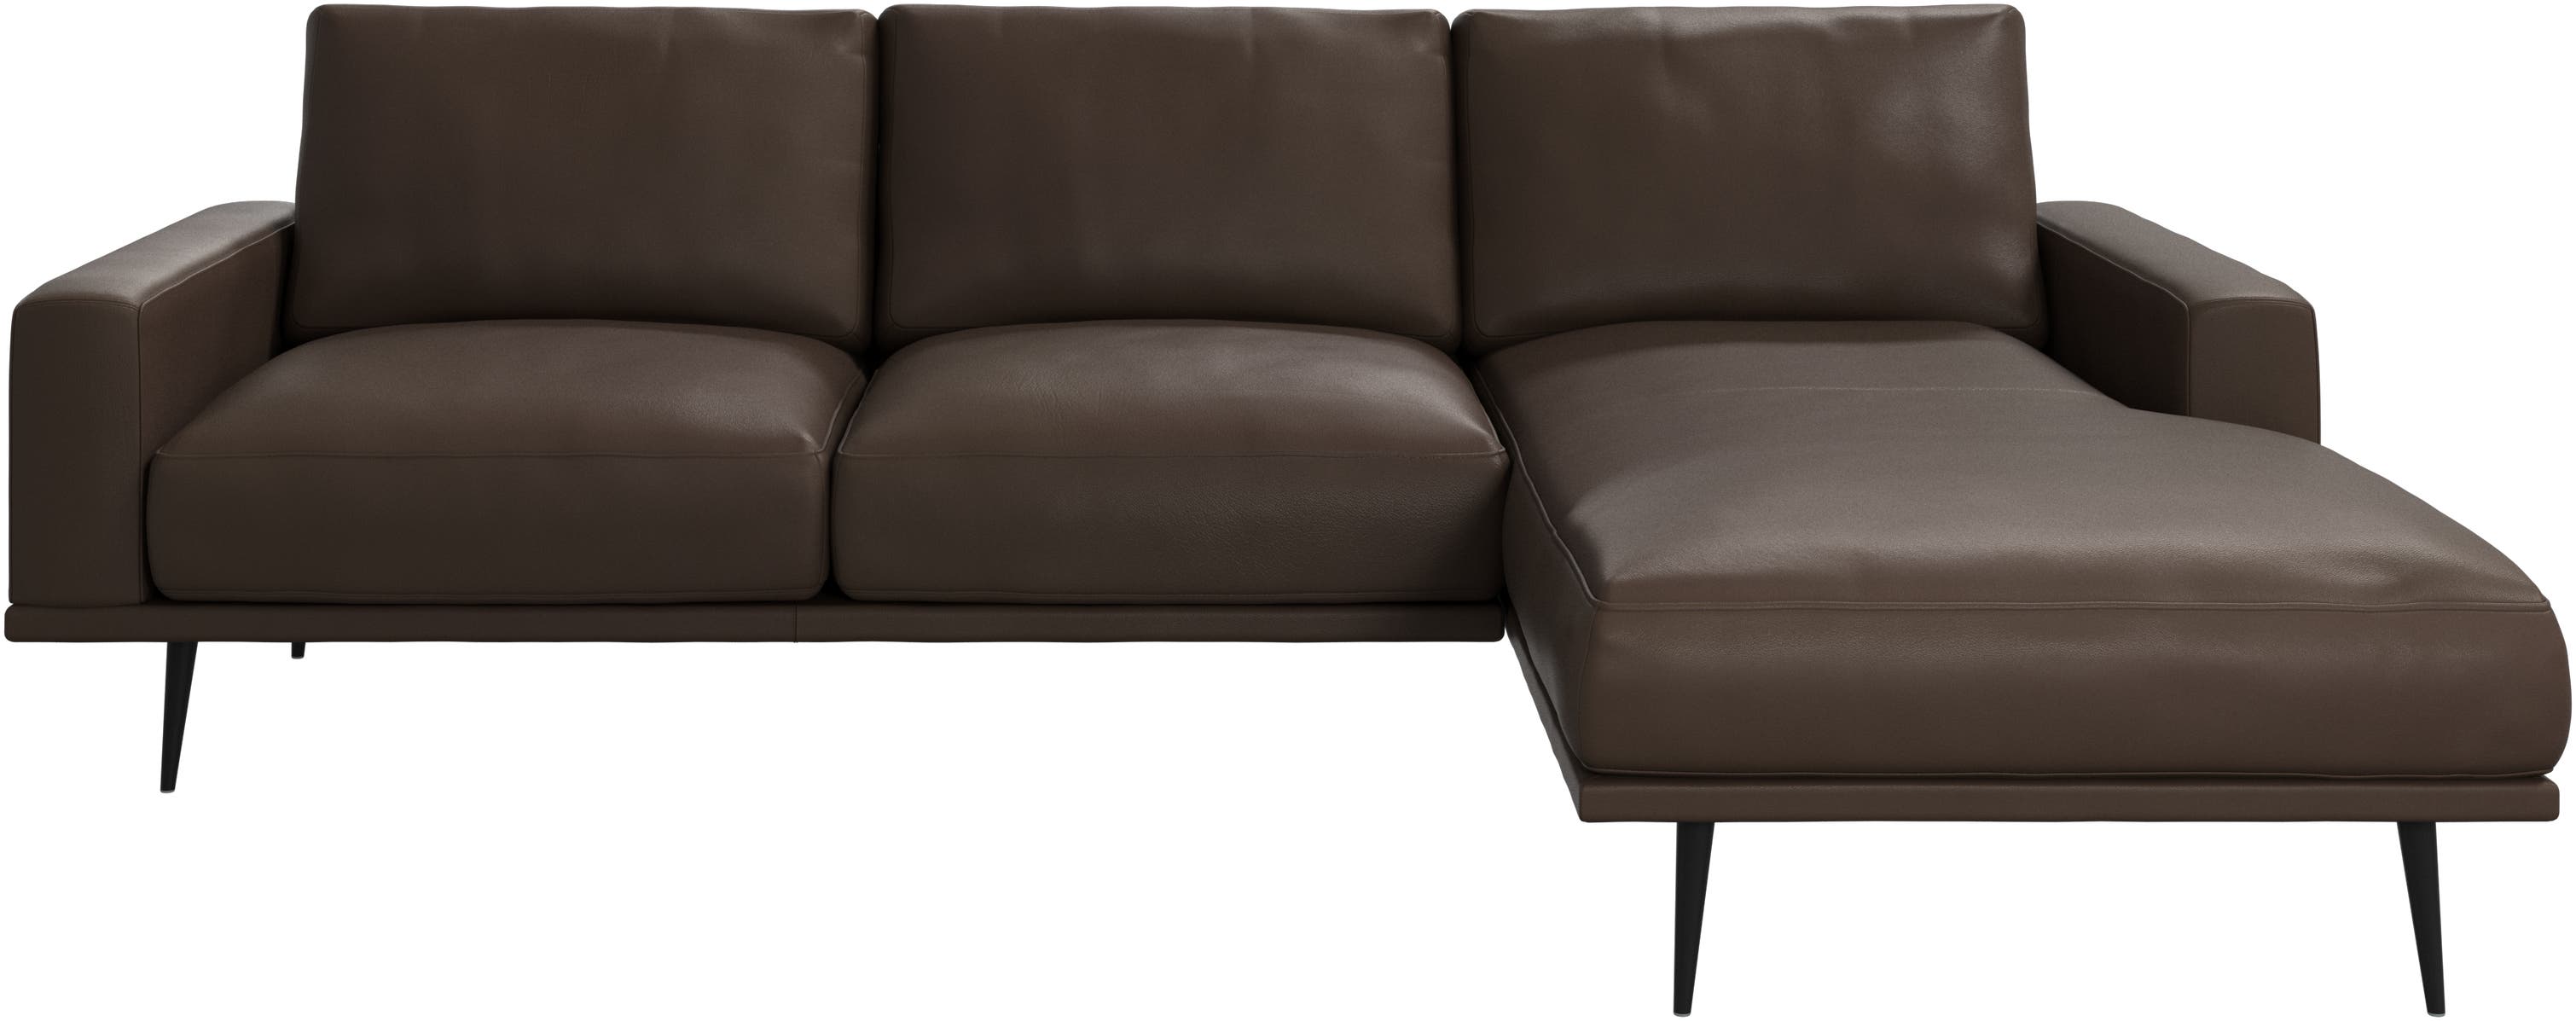 Carlton sofa with resting unit